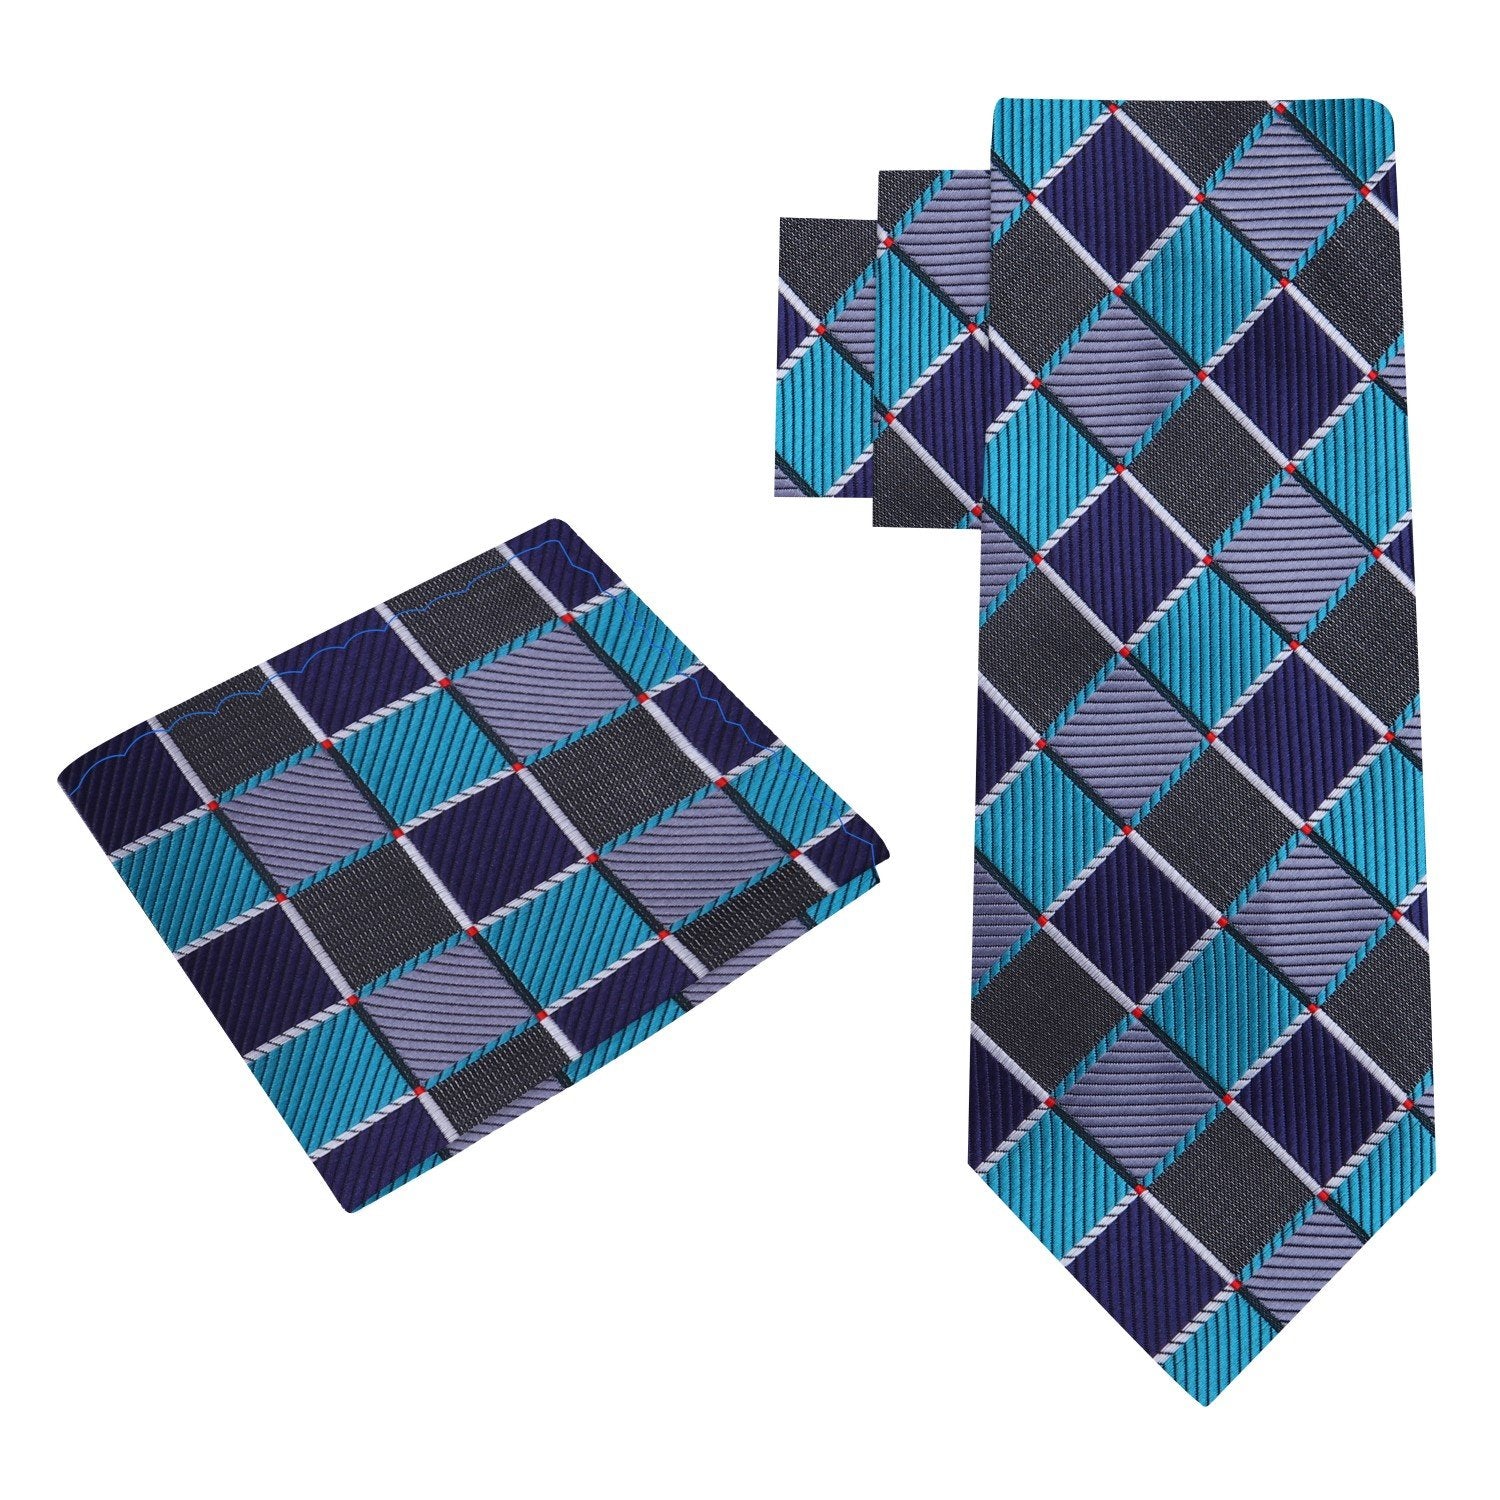 Alt View: Teal, Black, Grey Geometric Tie and Pocket Square